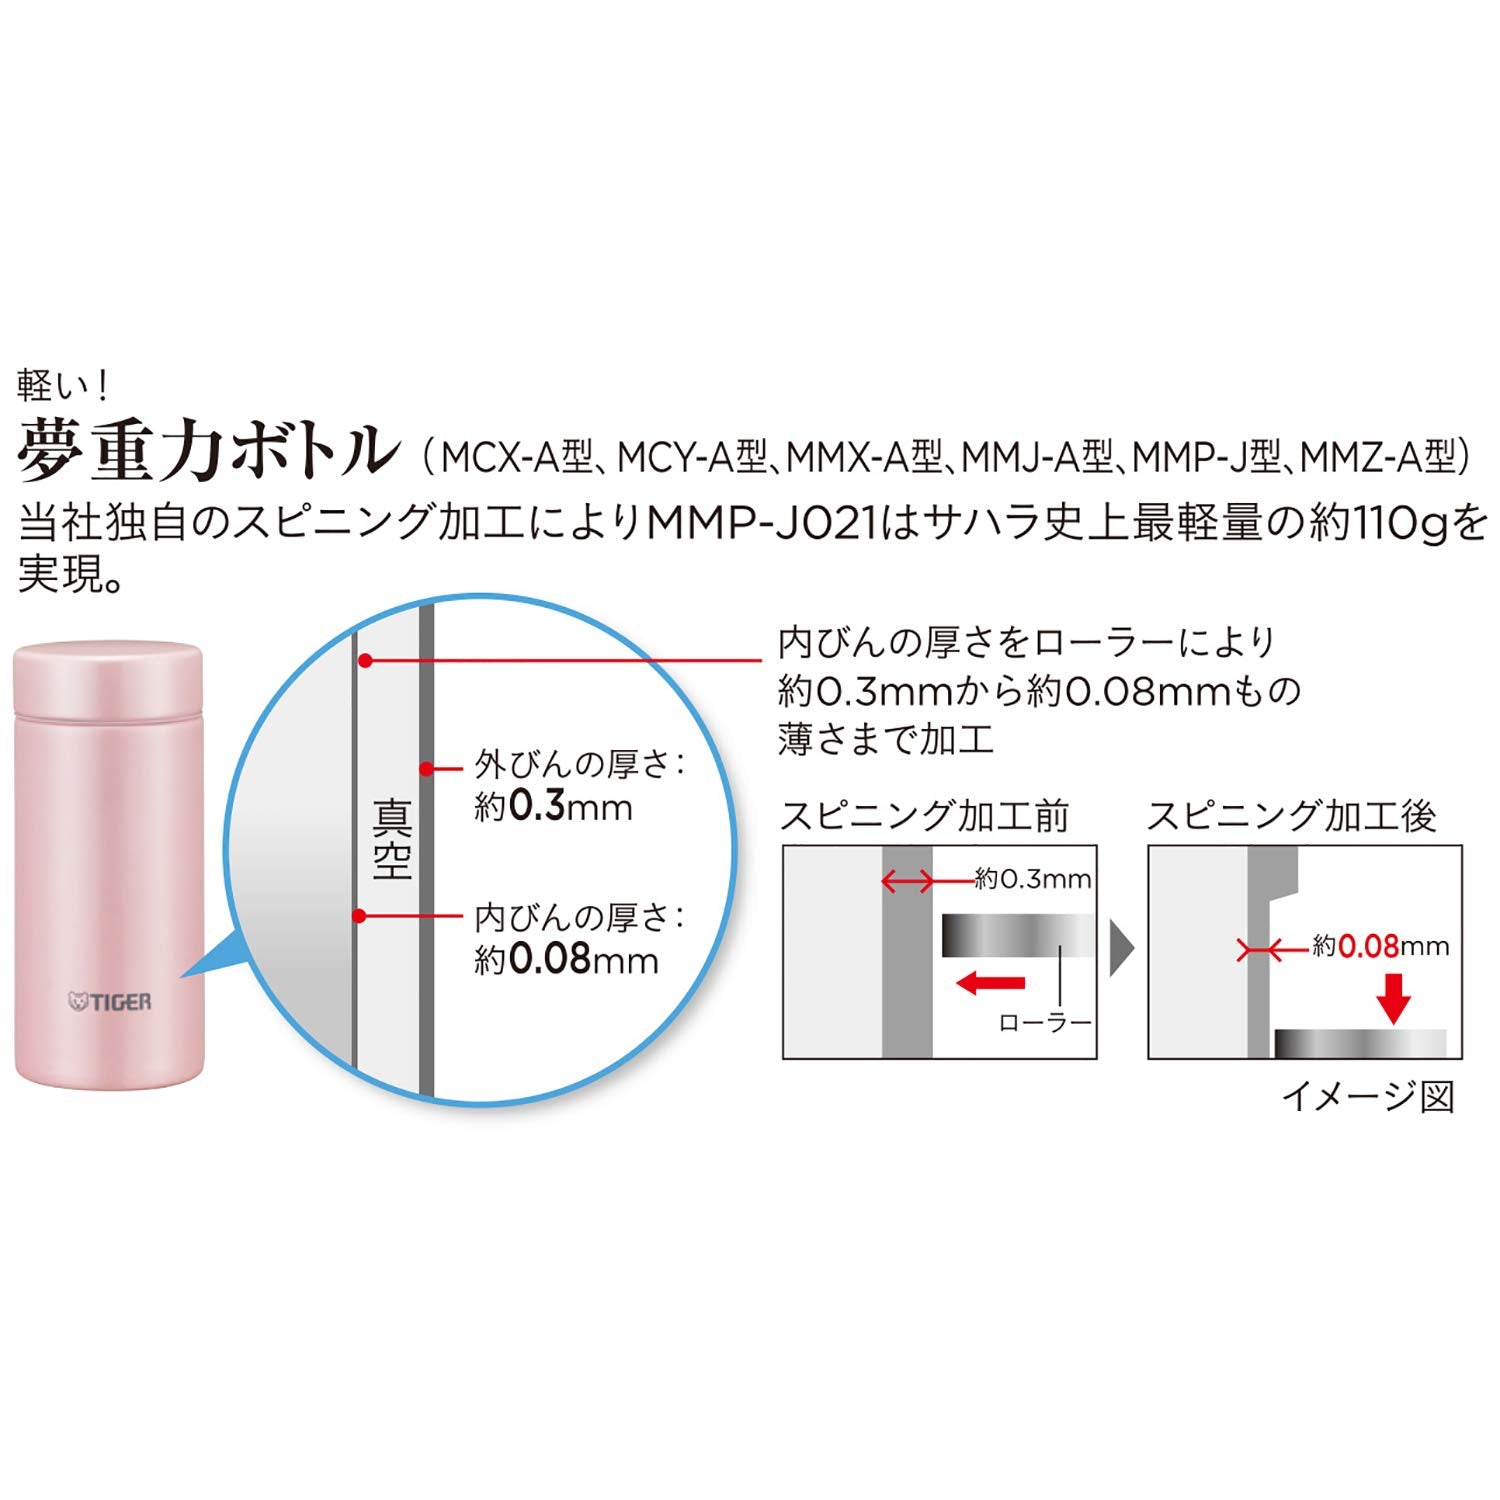 Tiger Thermos Mug Bottle Japan 200Ml Mmp-J021Aa Blue - Premium Quality Insulated Drinkware